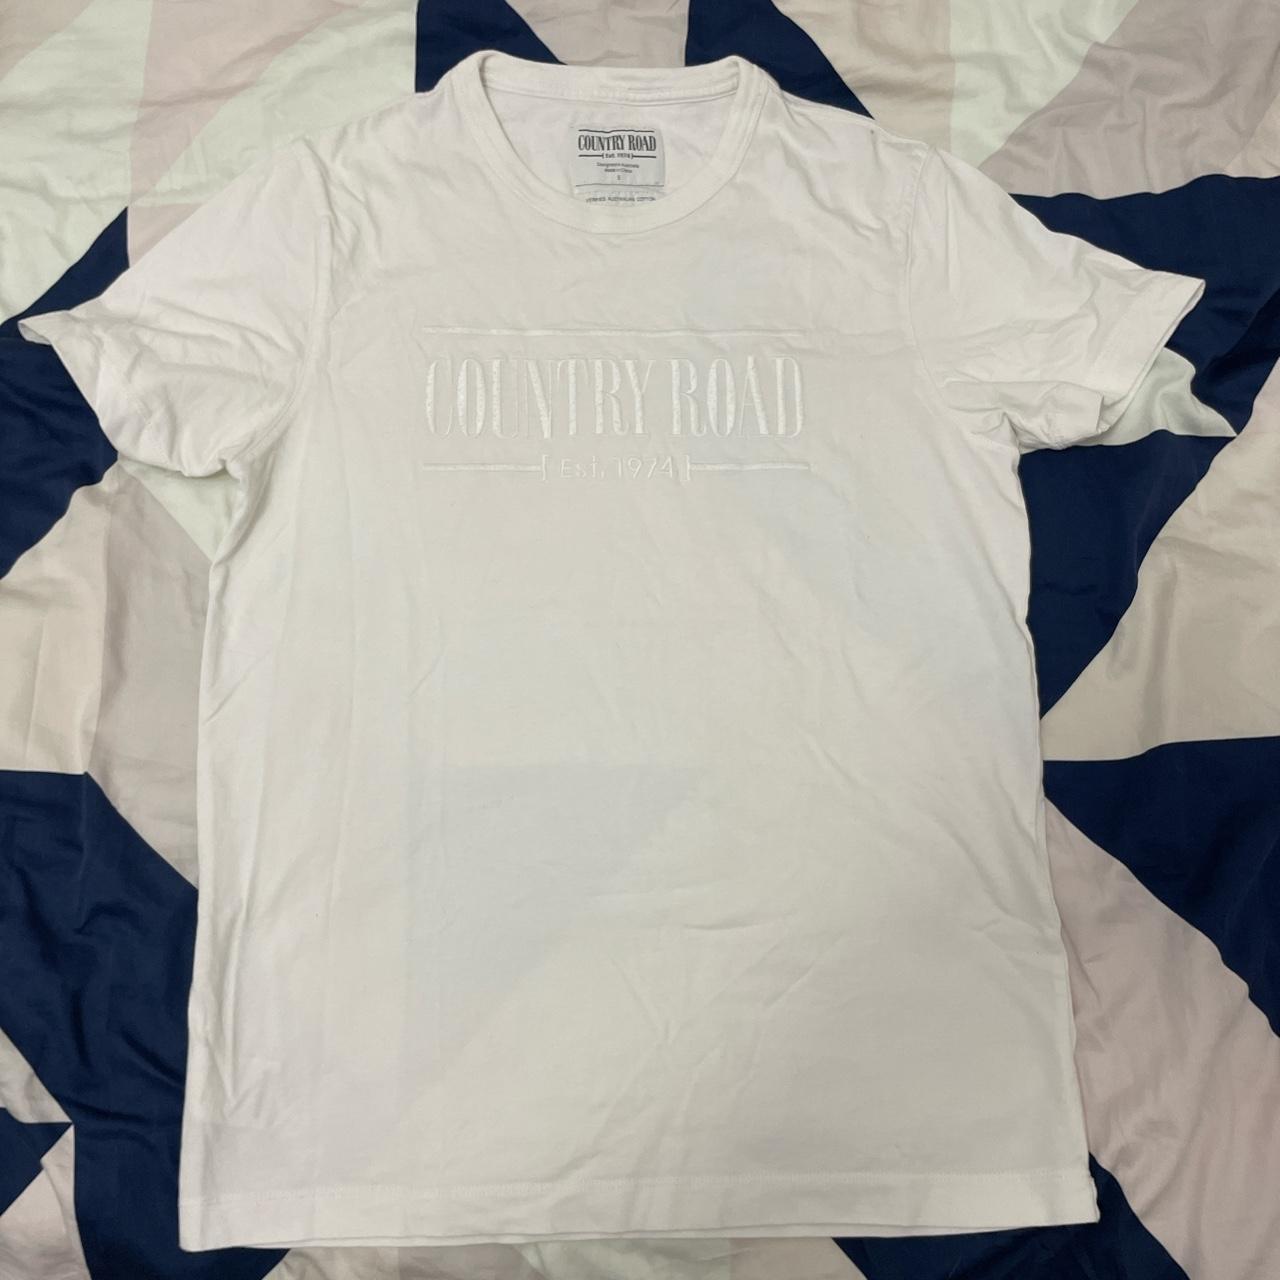 Country road white logo T shirt - Depop